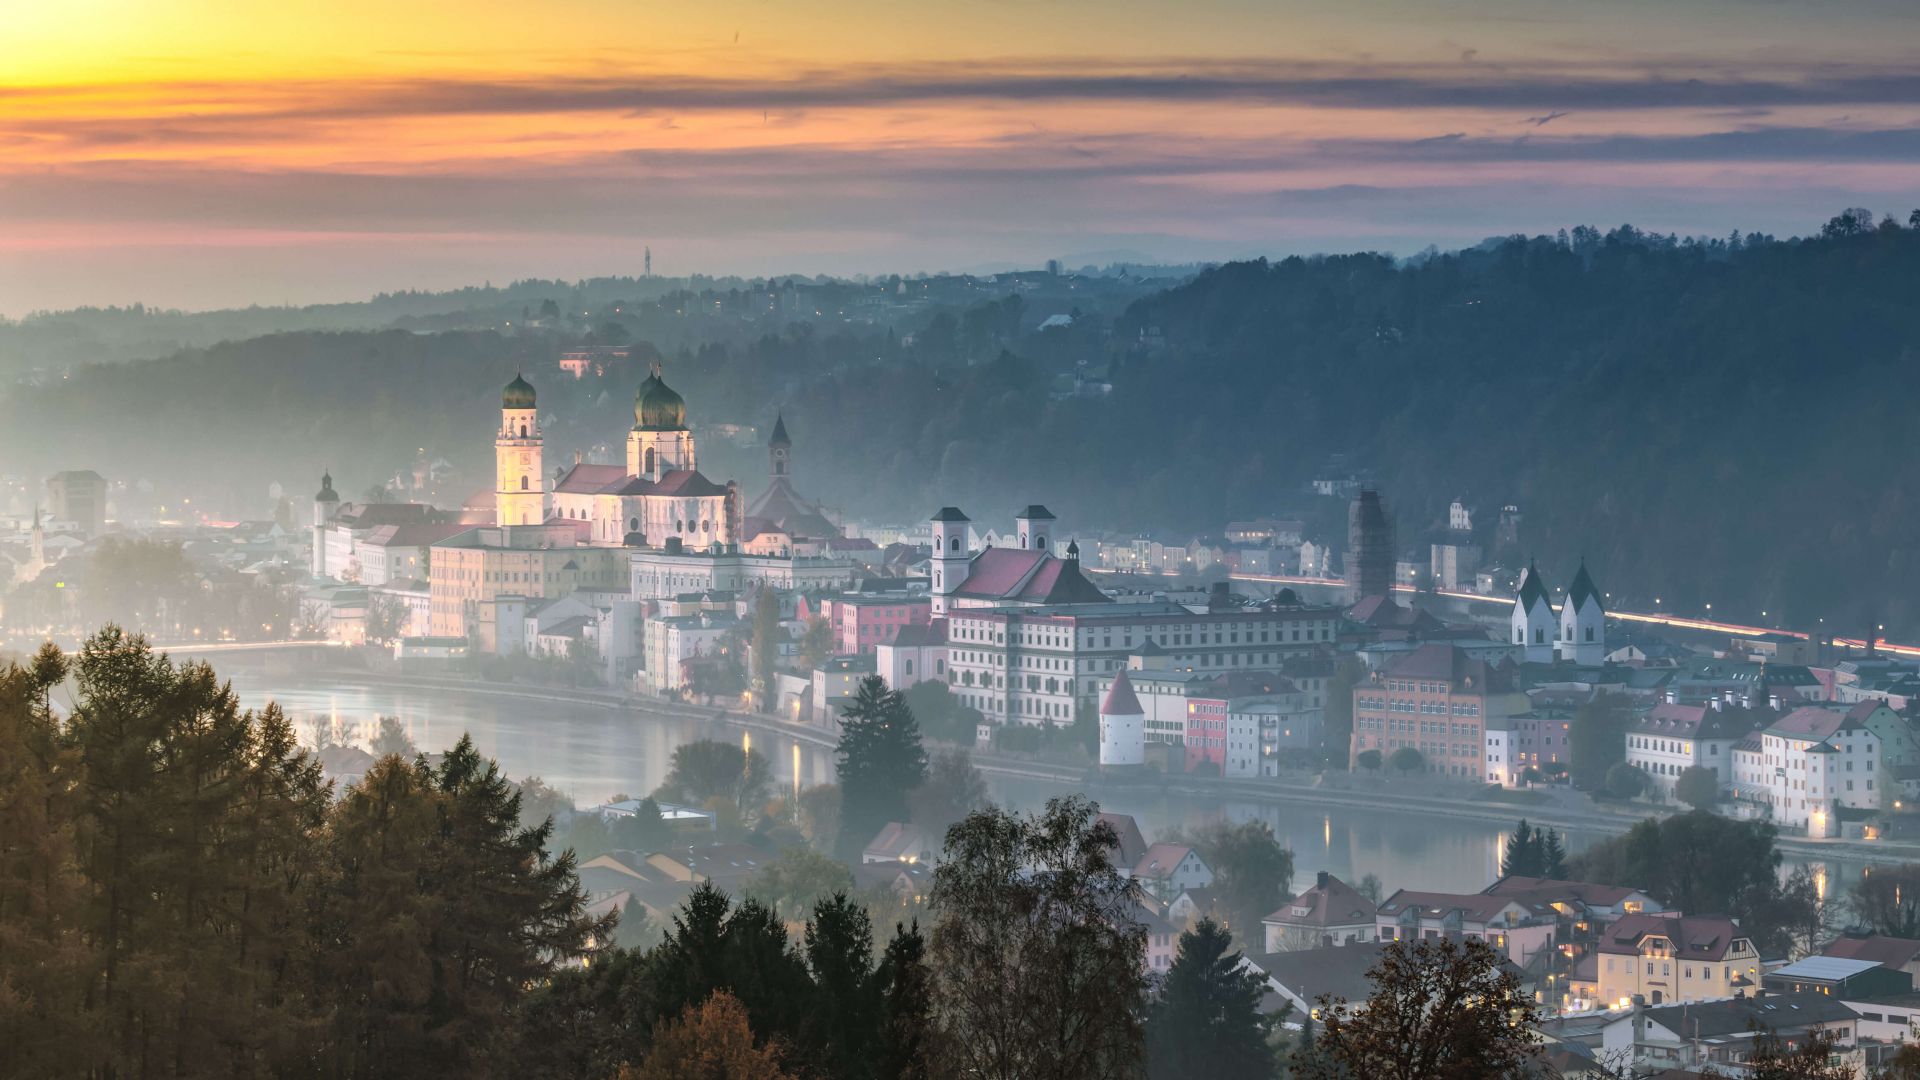 Dreiflüssestadt, Abenddämmerung, Passau, Bayern, Germany, sky, sunset, 4K (horizontal)